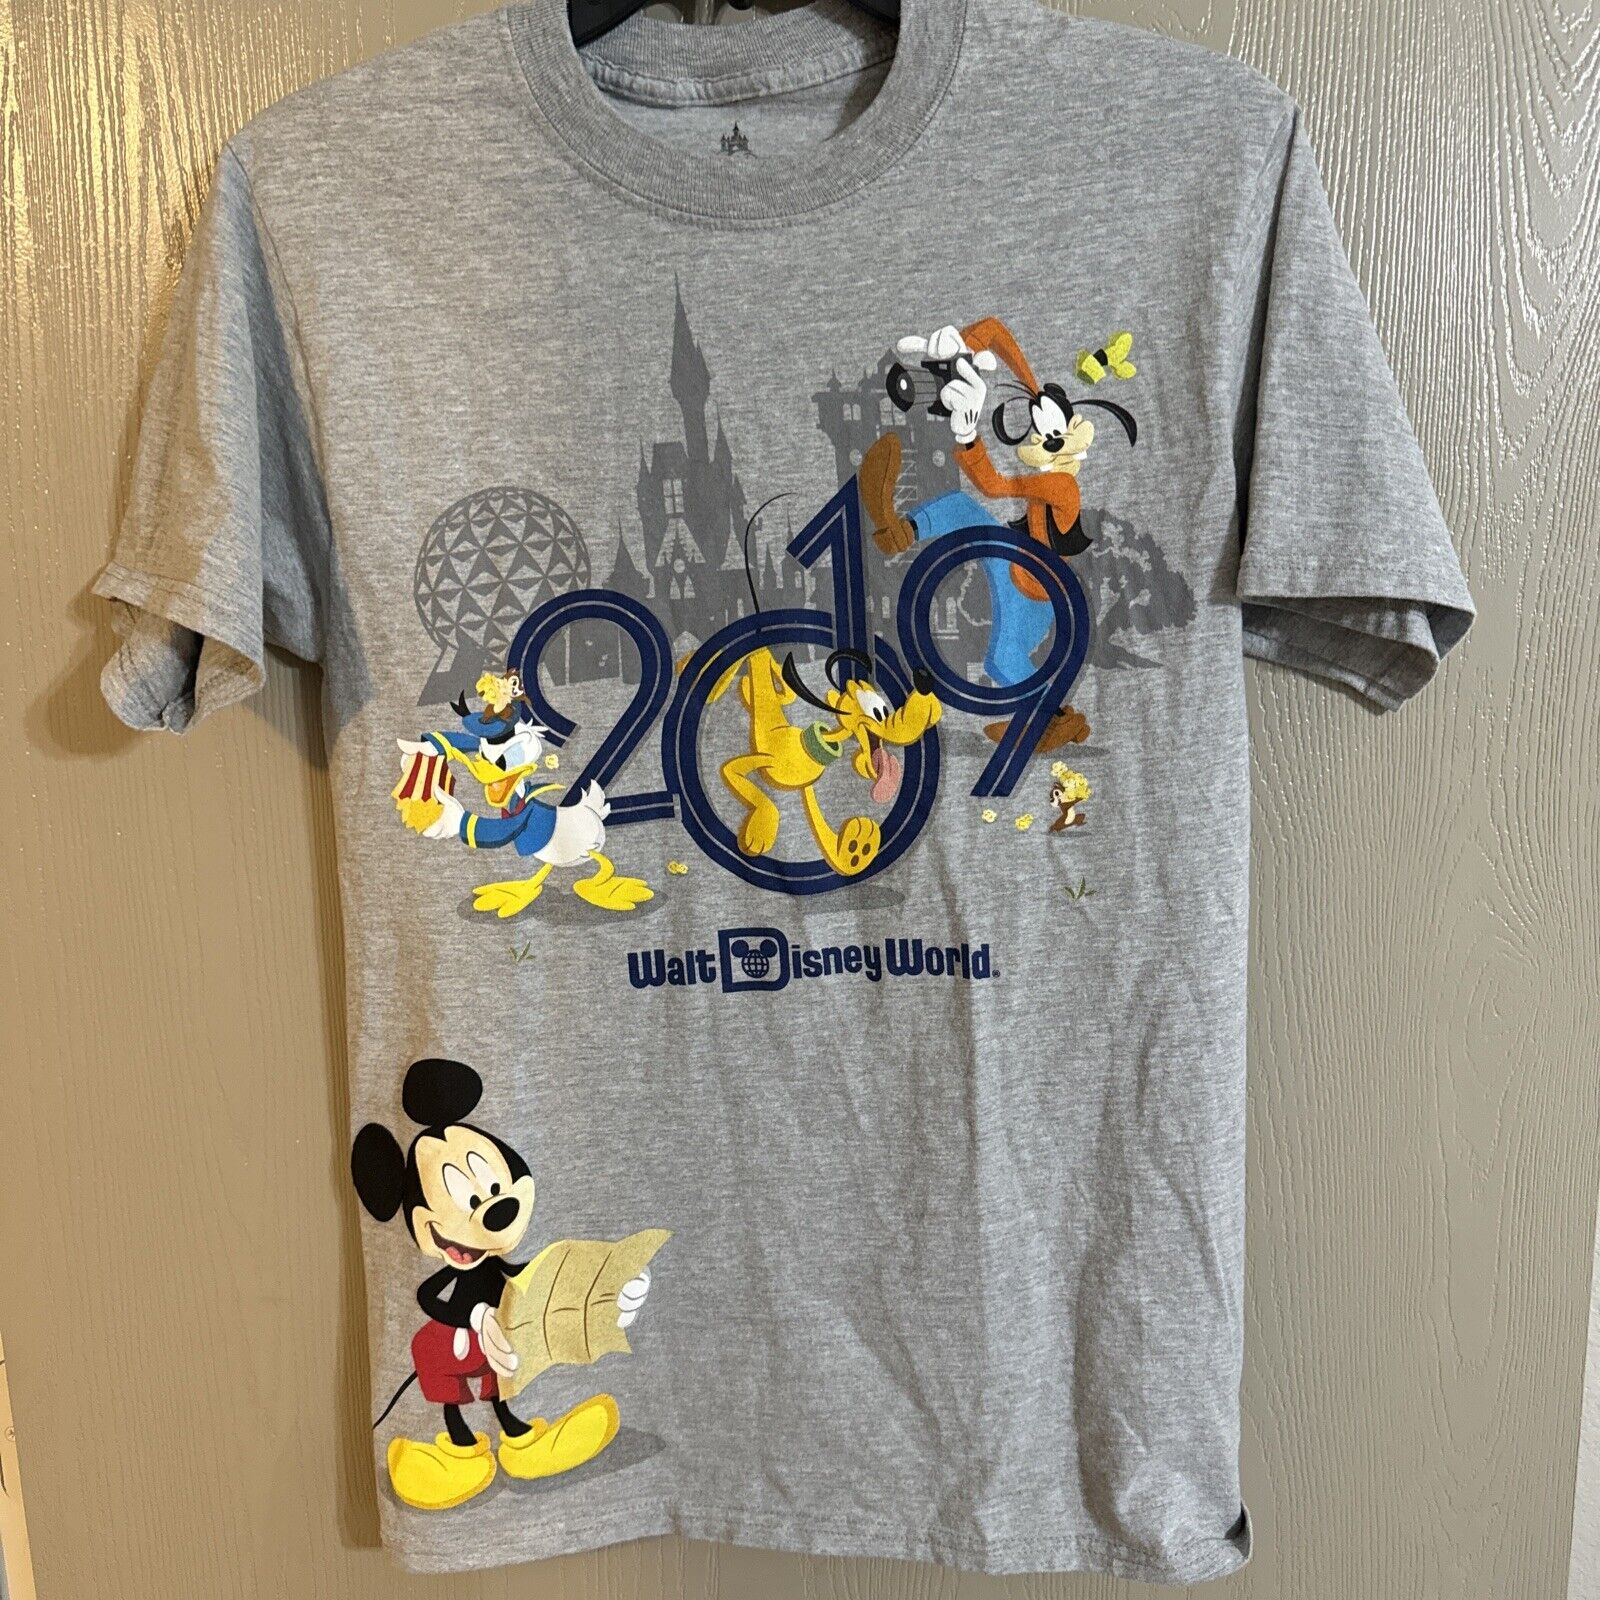 Disney Parks T-shirt Short Sleeve 2019 Walt Disney World Graphic Gray Adult S.